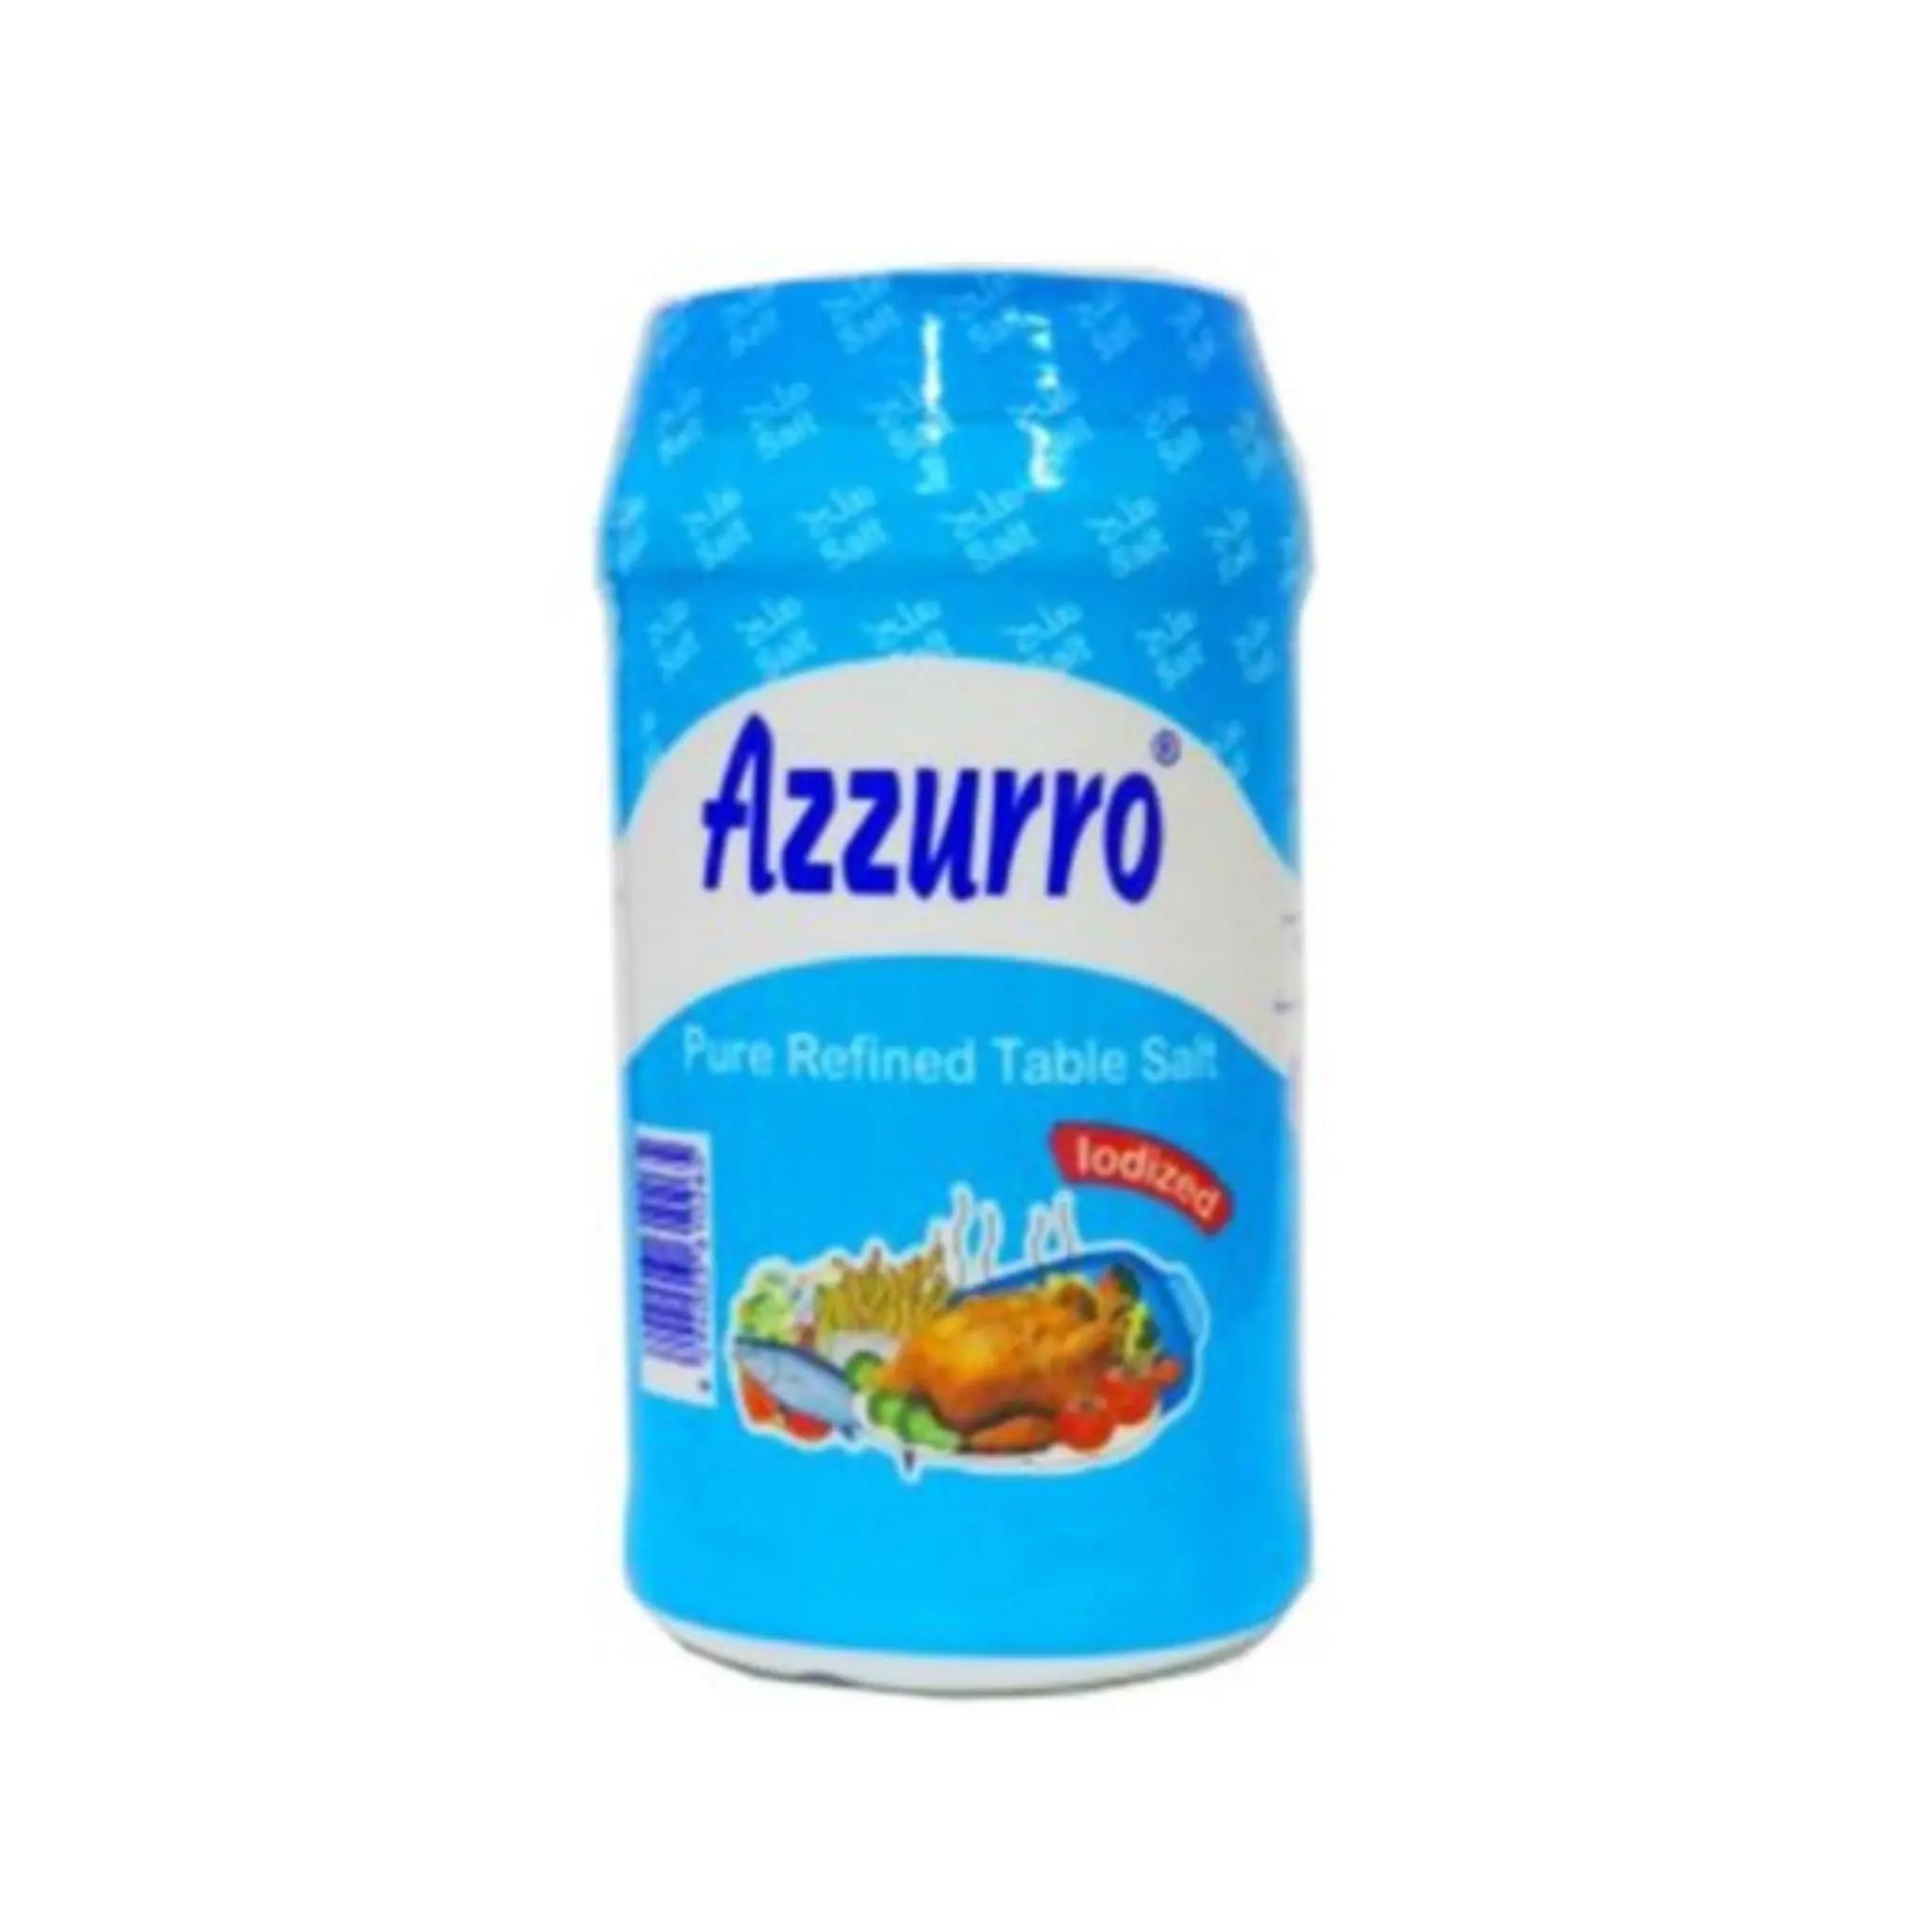 Azzurro Iodized Table Salt - 700gx12 (1 carton) Marino.AE